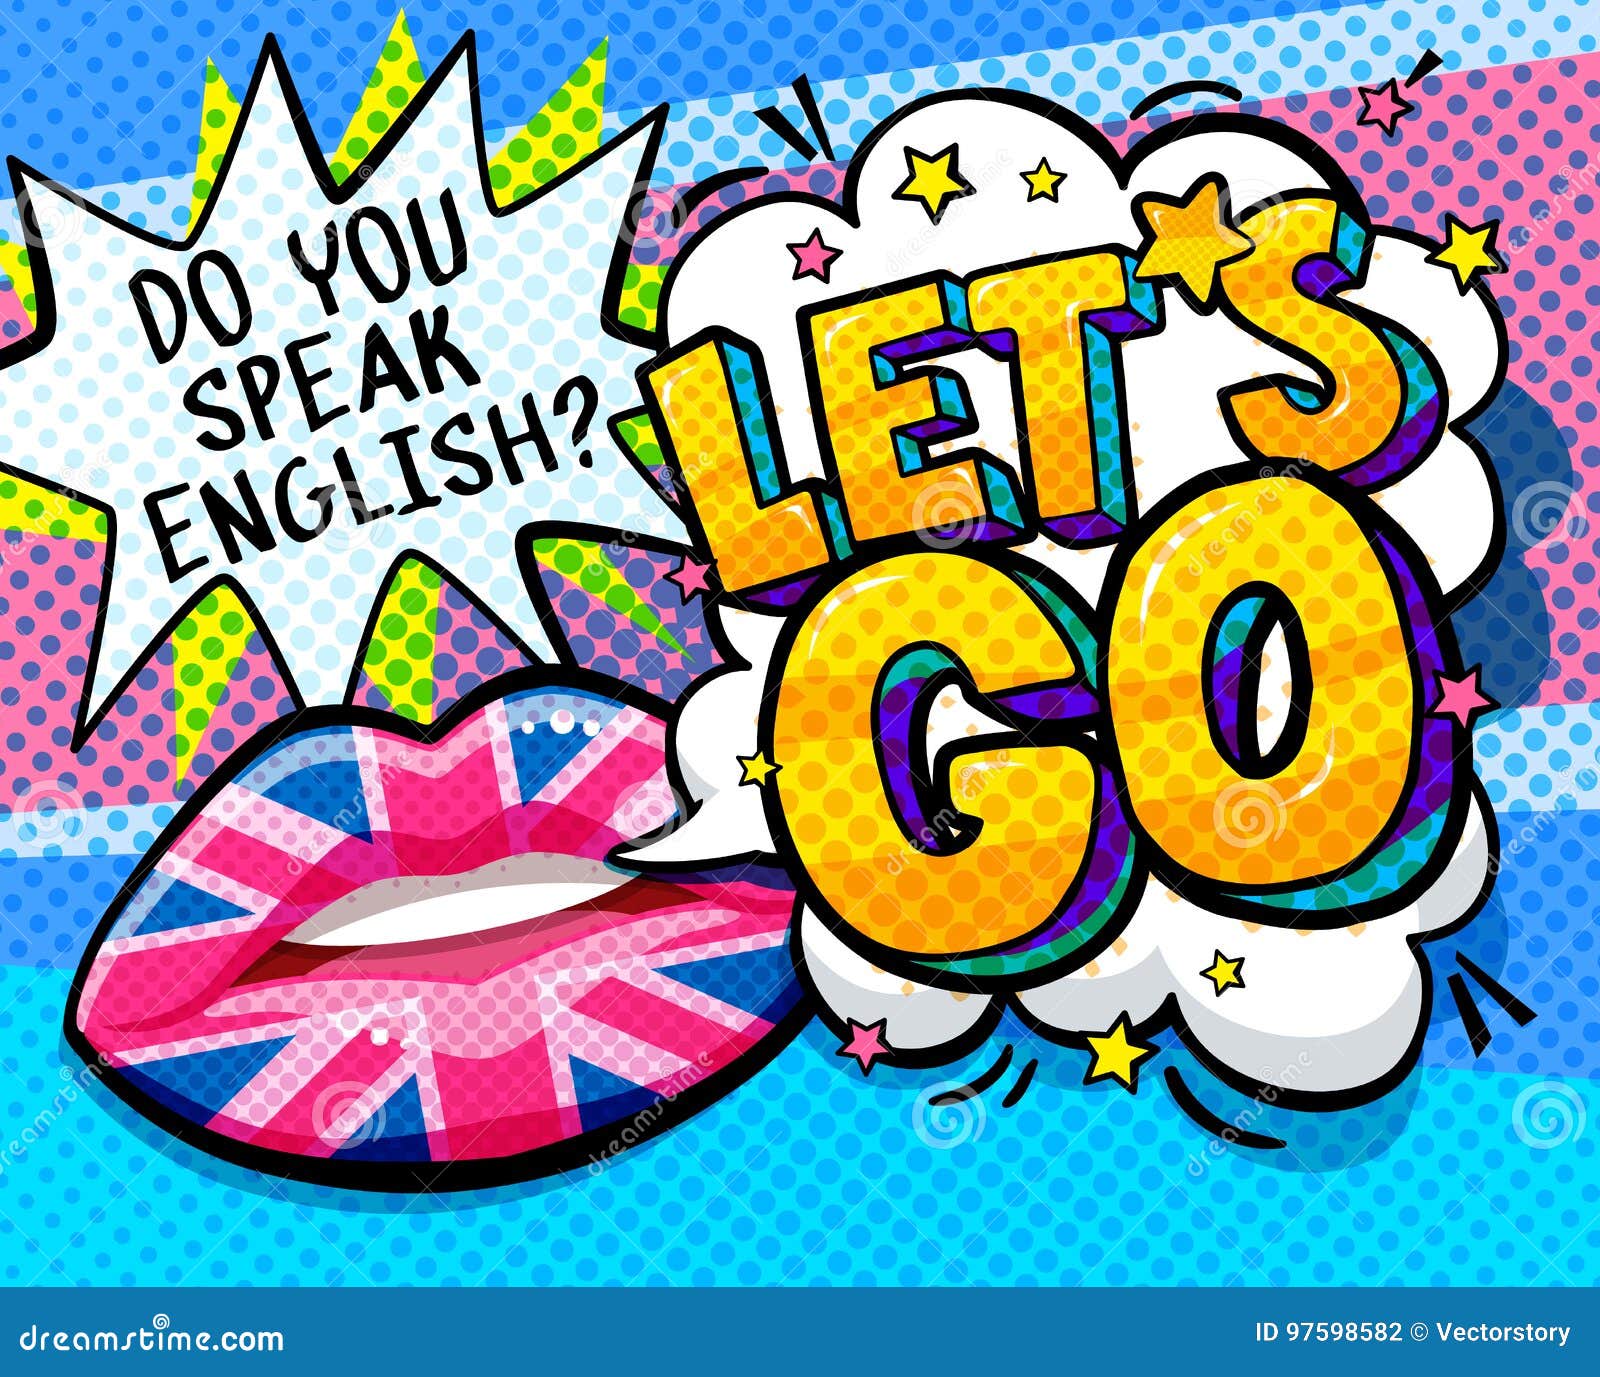 english language clipart